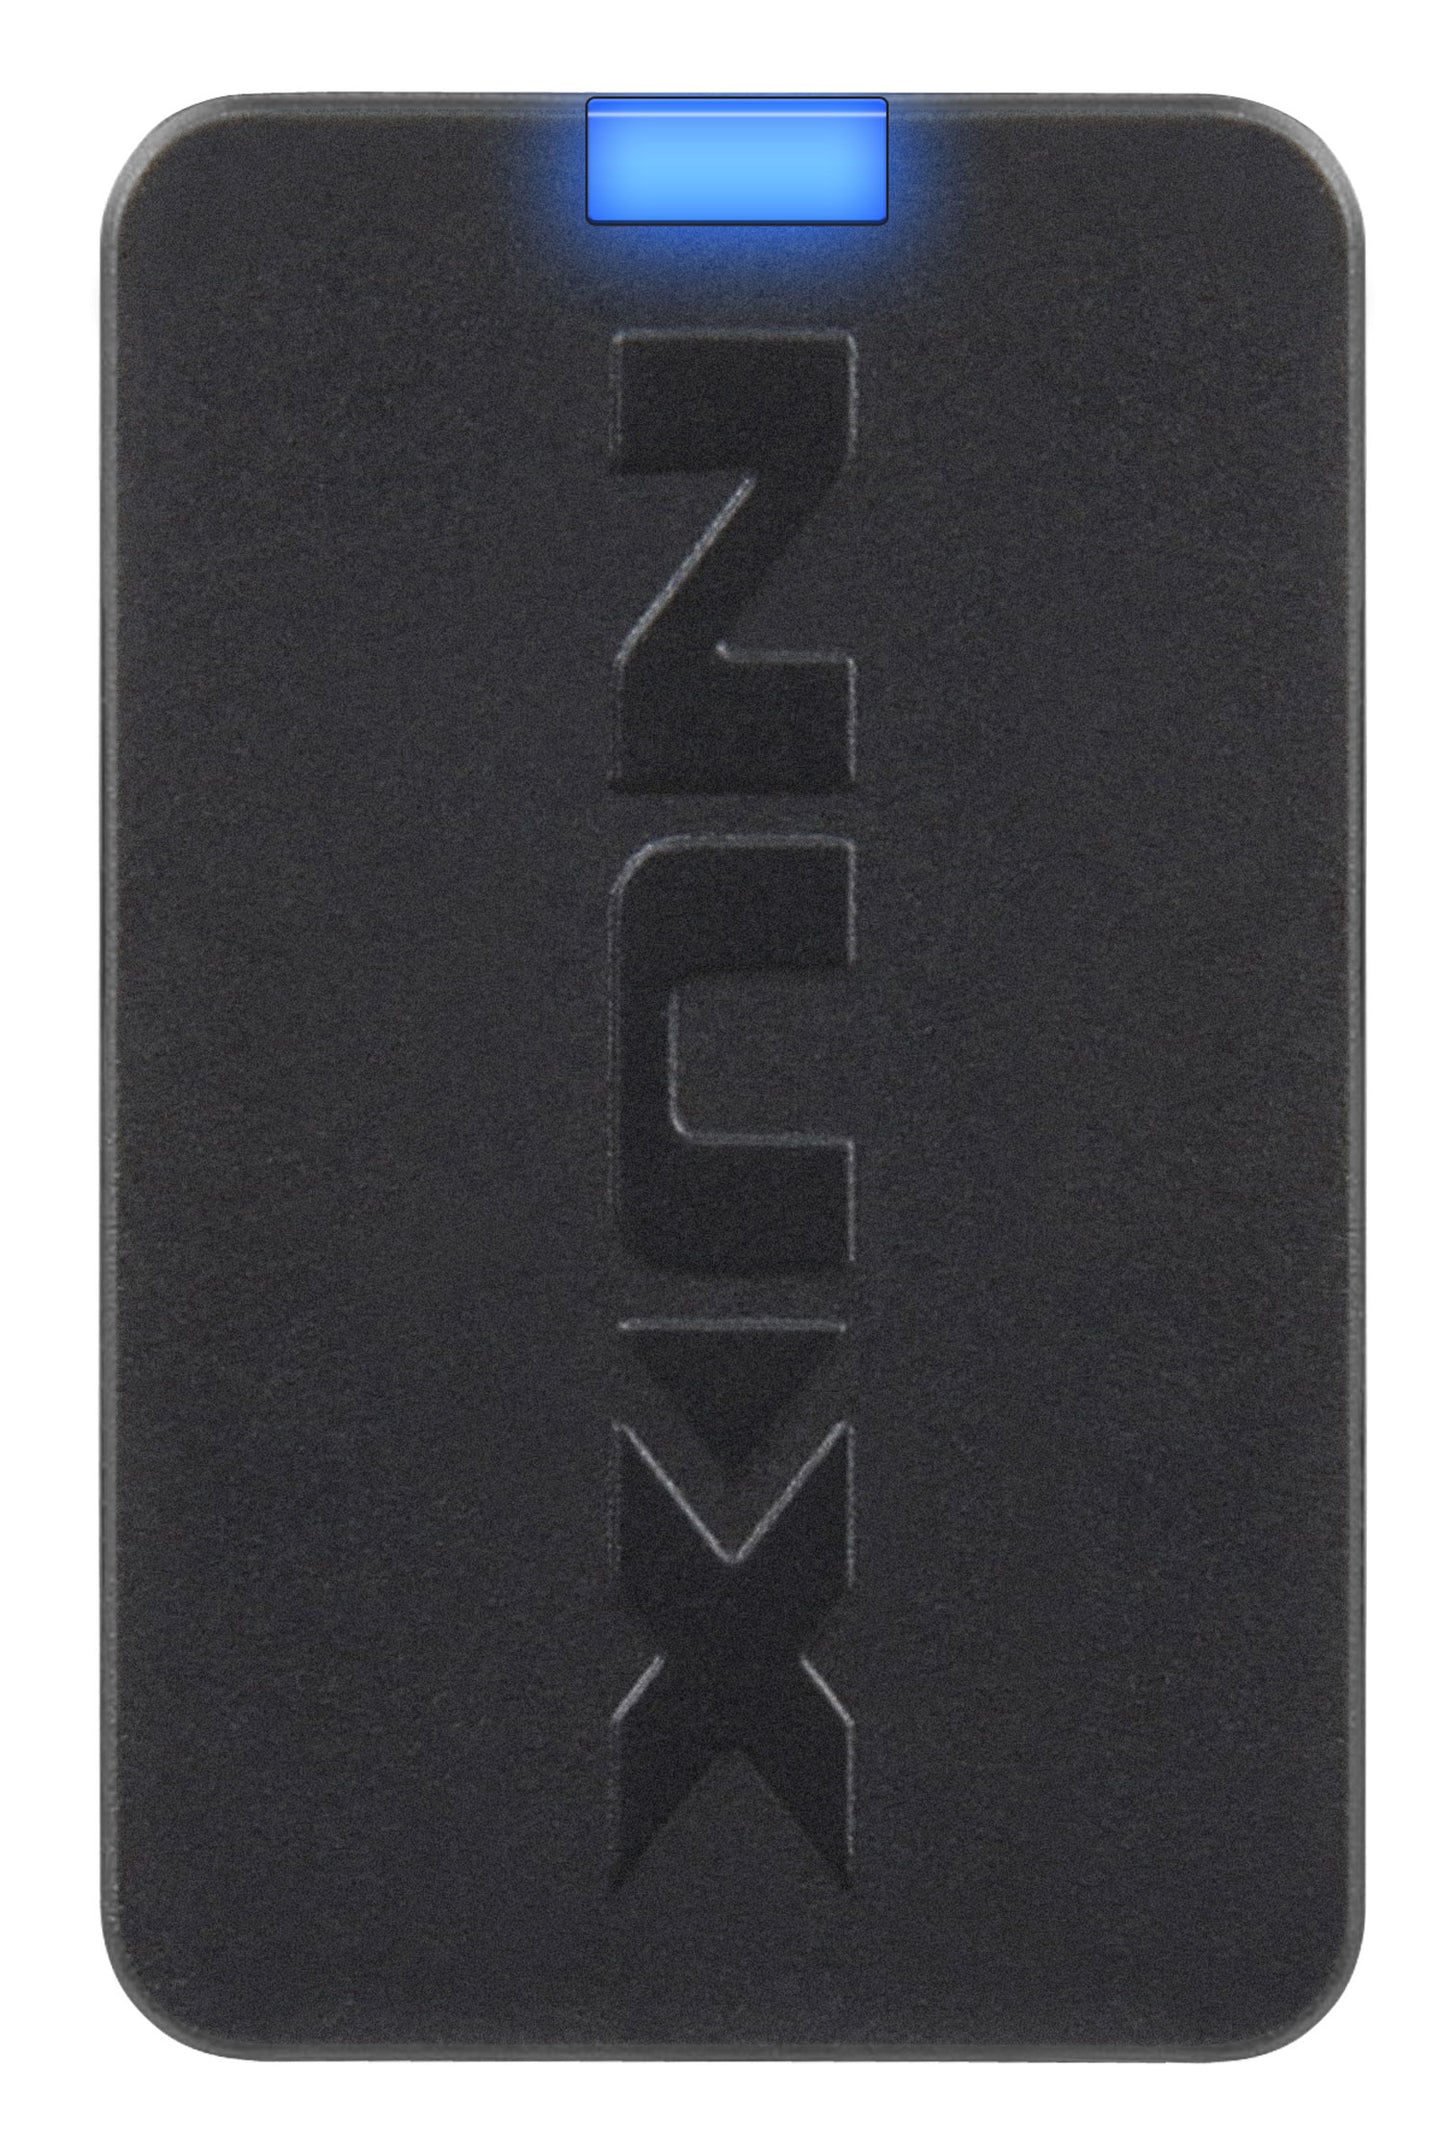 NUX - NEK-100 61-Key Portable Keyboard